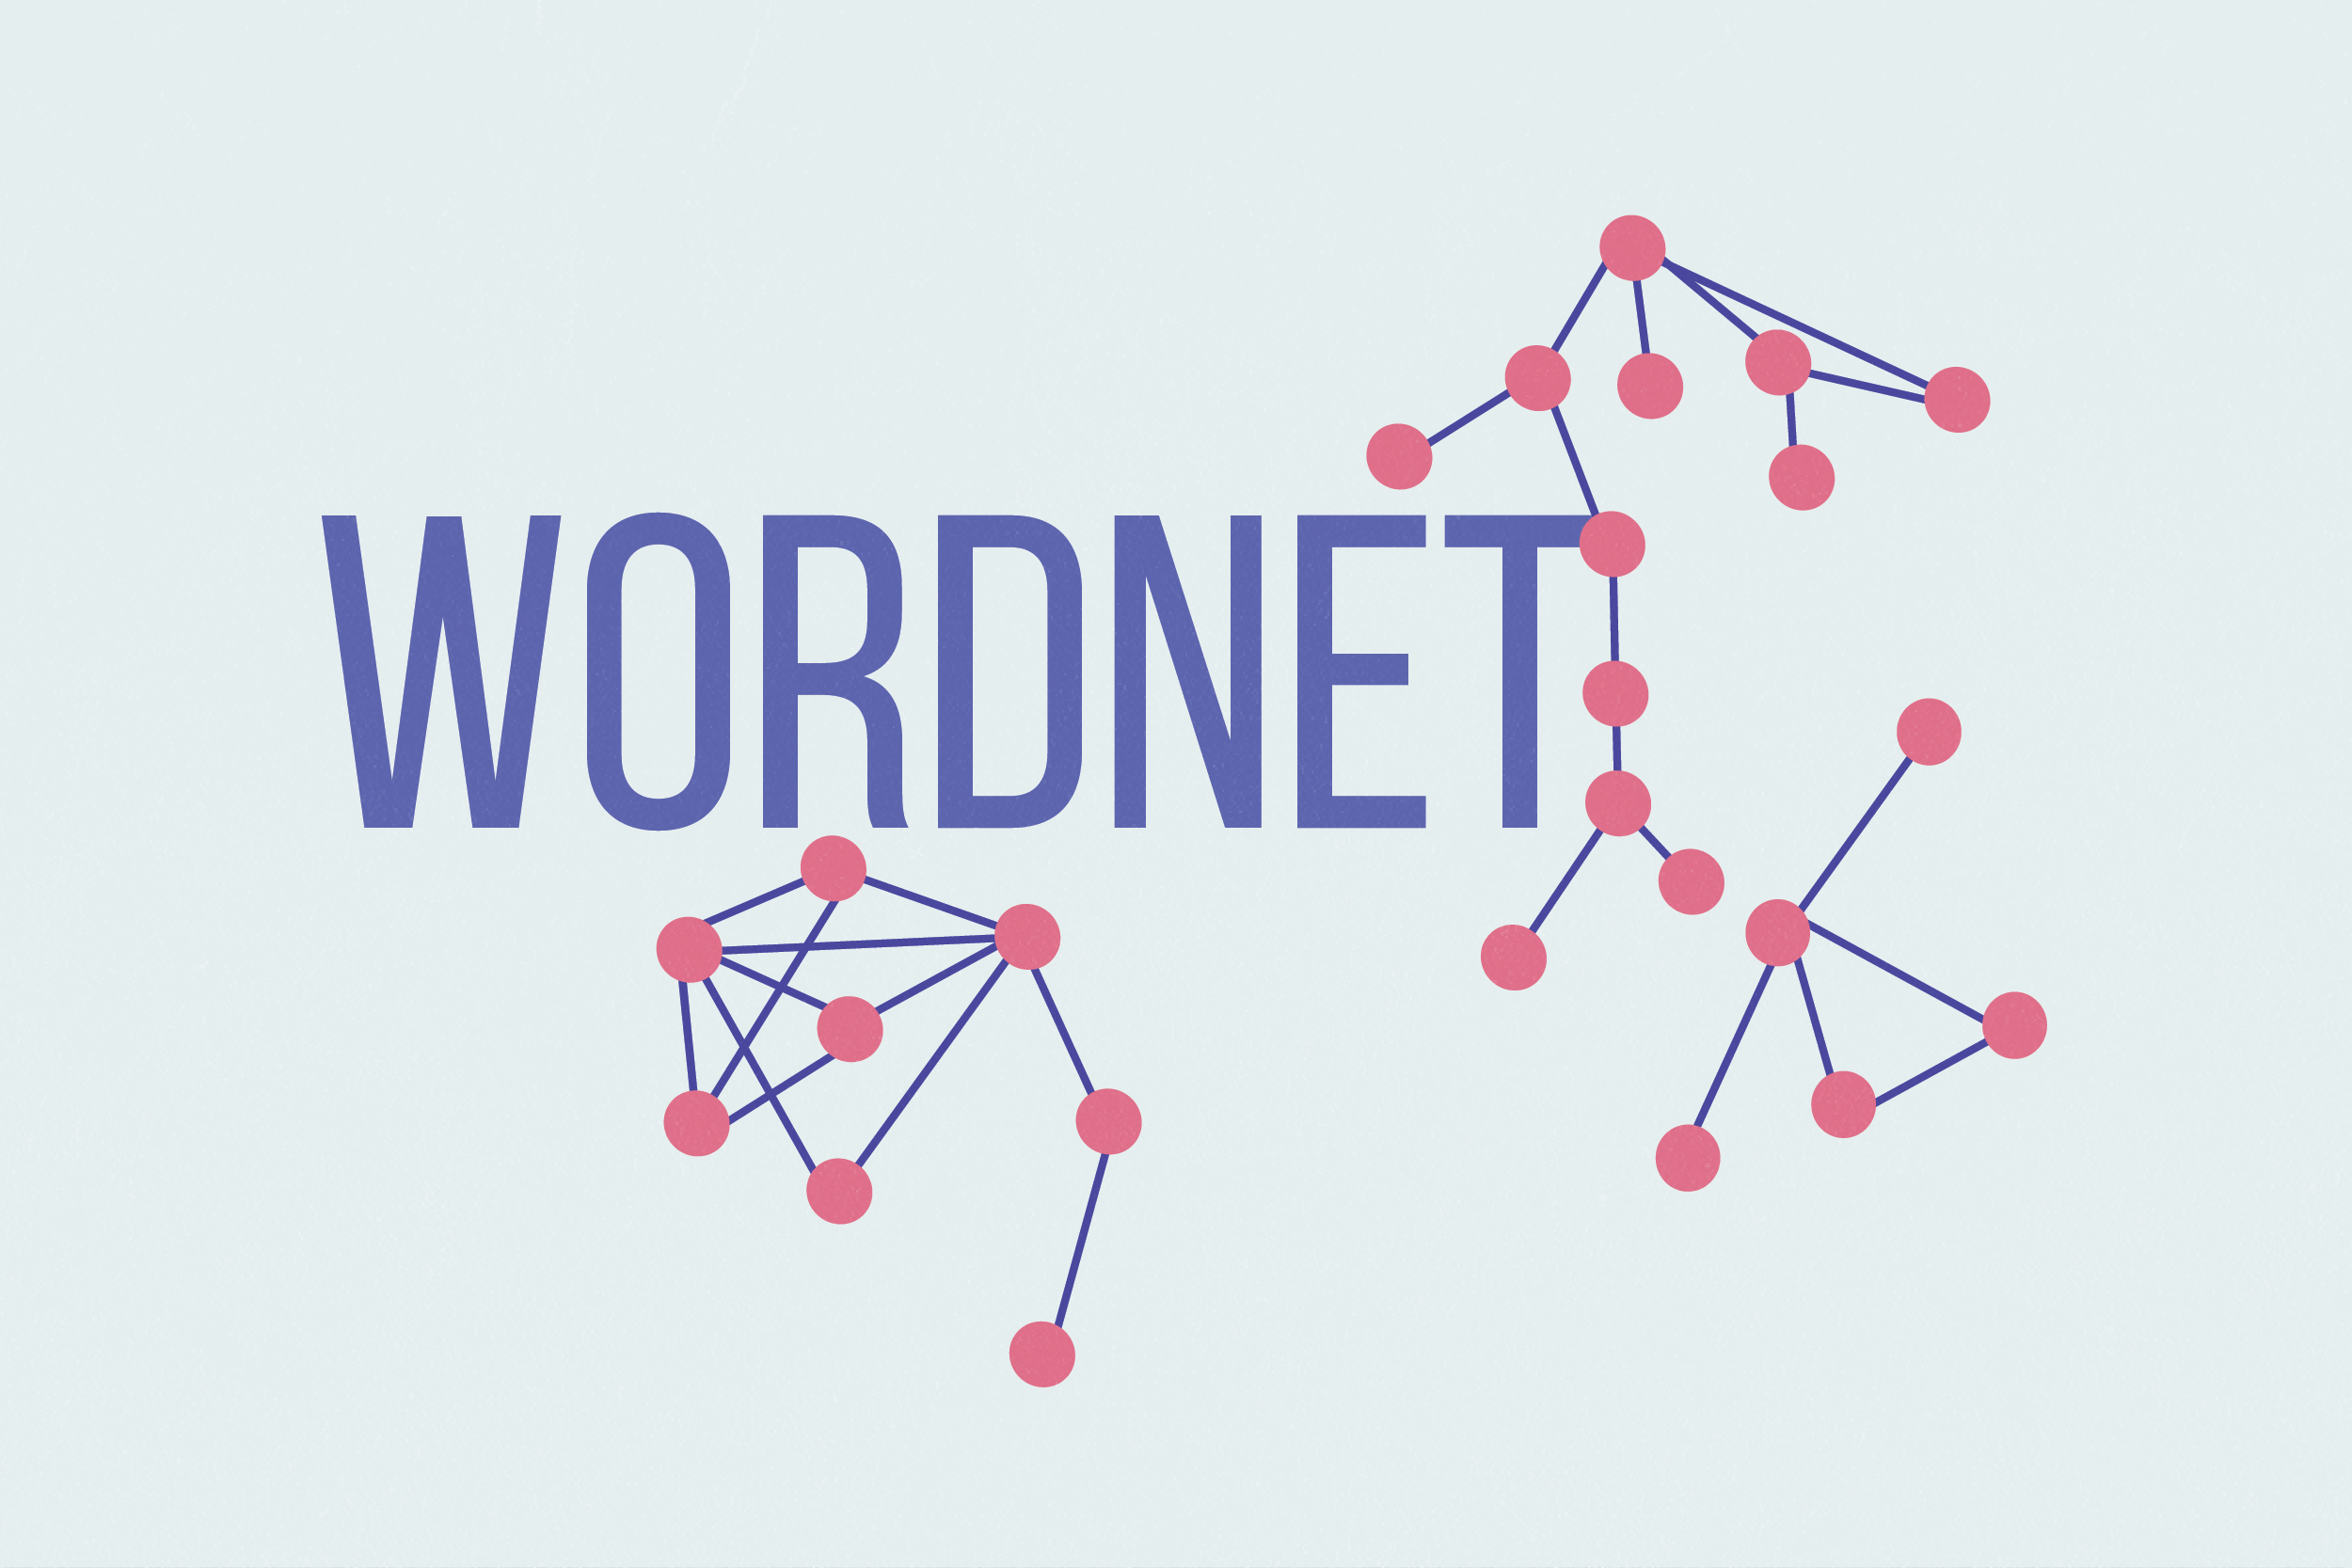 WordNet